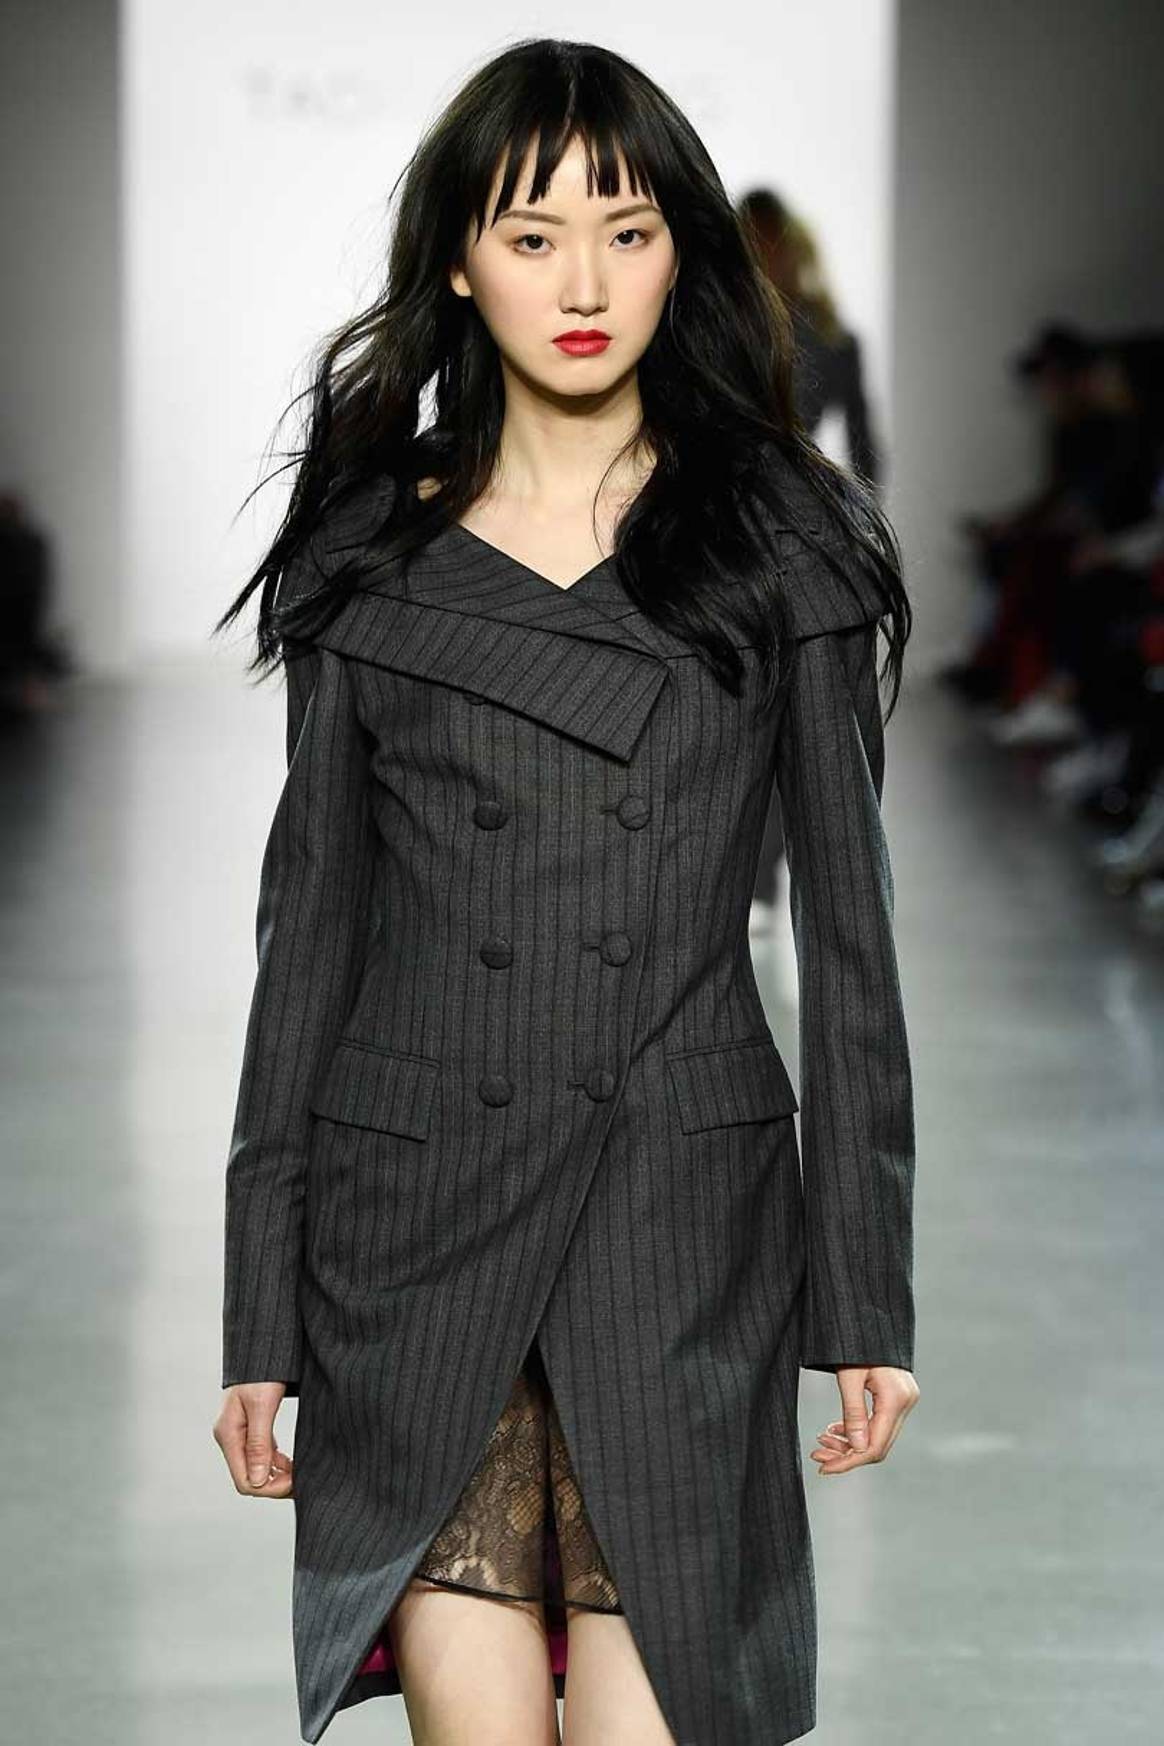 Taoray Wang goes for royal inspiration for New York Fashion Week